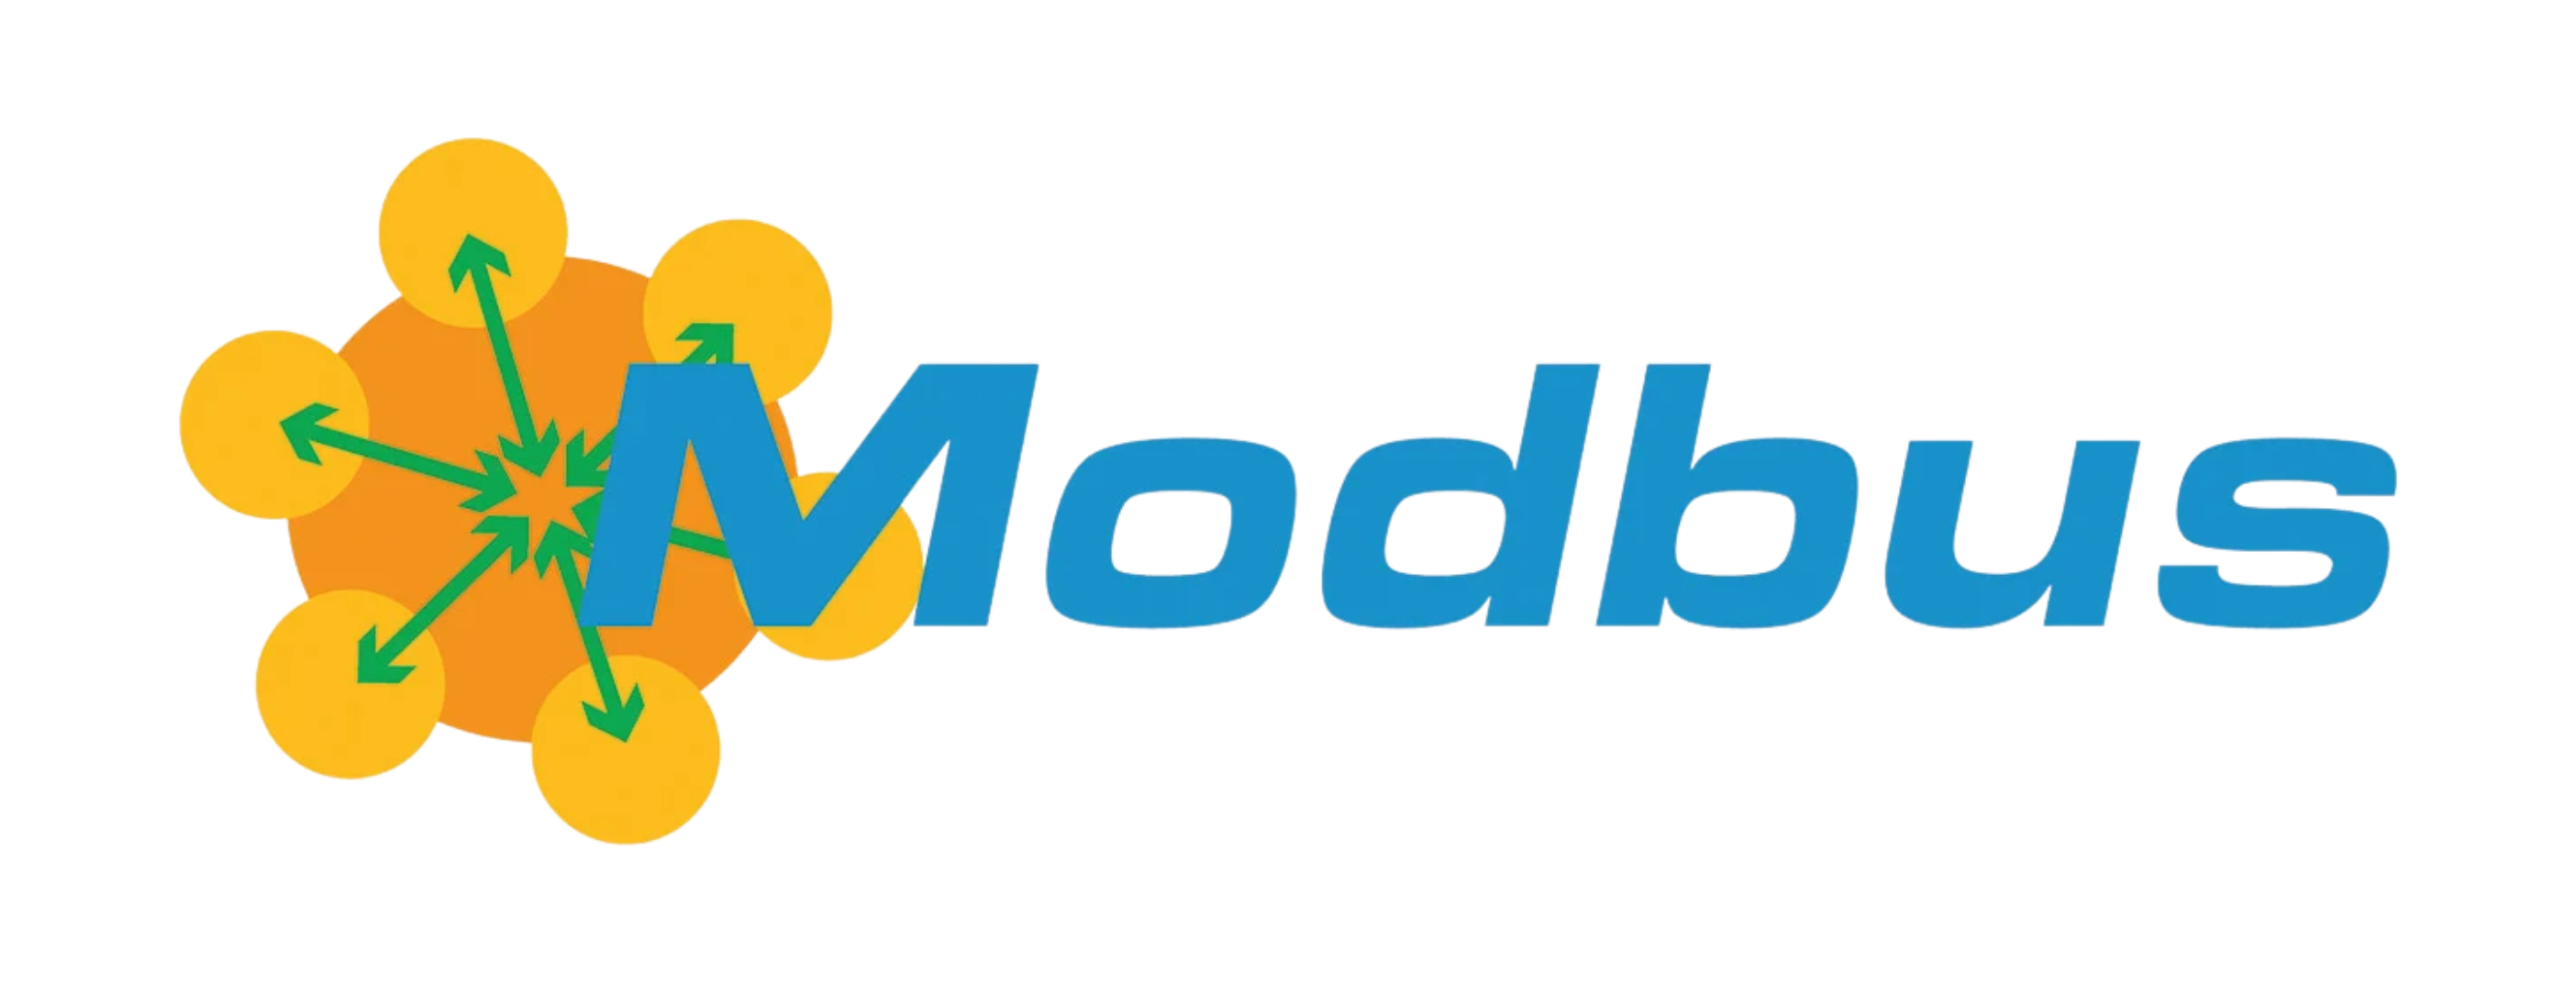 Modbus protocol for building management